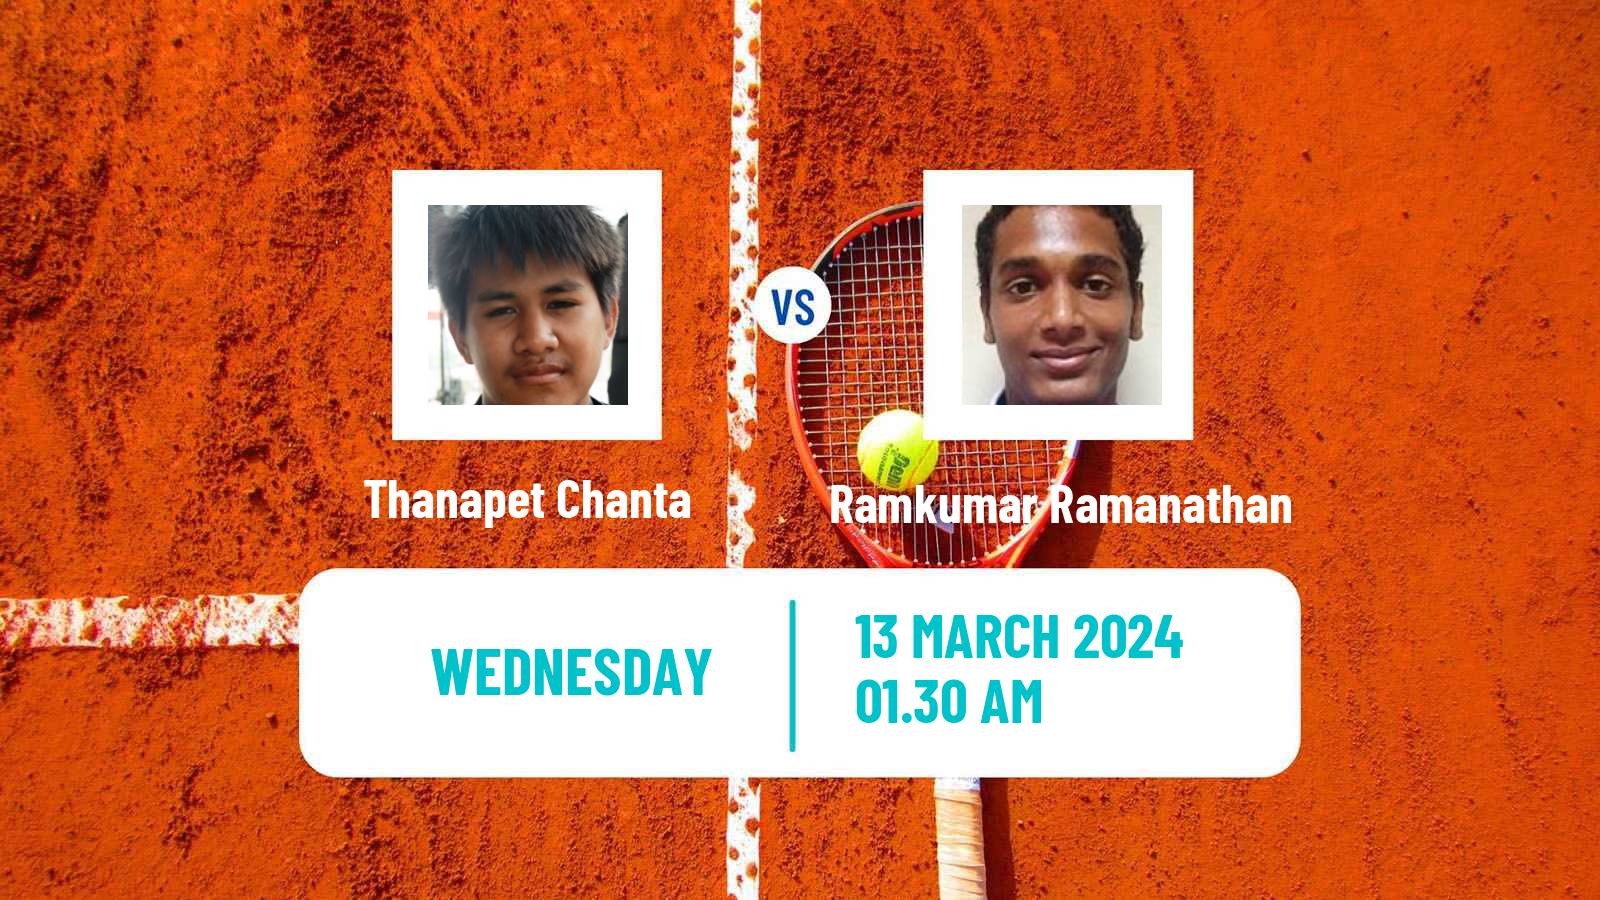 Tennis ITF M25 New Delhi Men Thanapet Chanta - Ramkumar Ramanathan